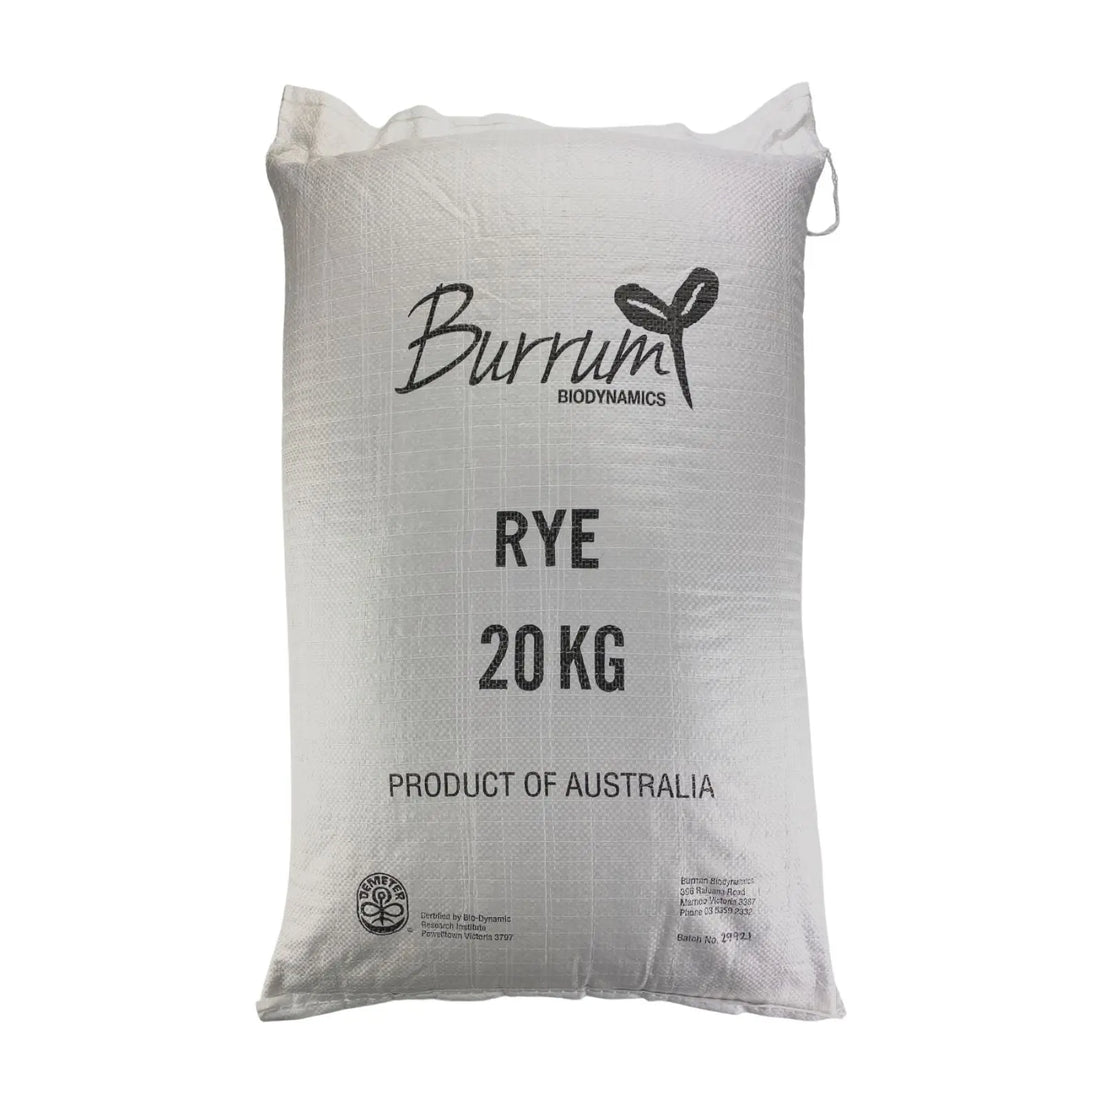 Rye Grain Biodynamic 20kg-Pulse & Grain-Burrum Biodynamics-Sovereign Foods-Organic-Biodynamic-Grain-Home Milling-Australian Grown